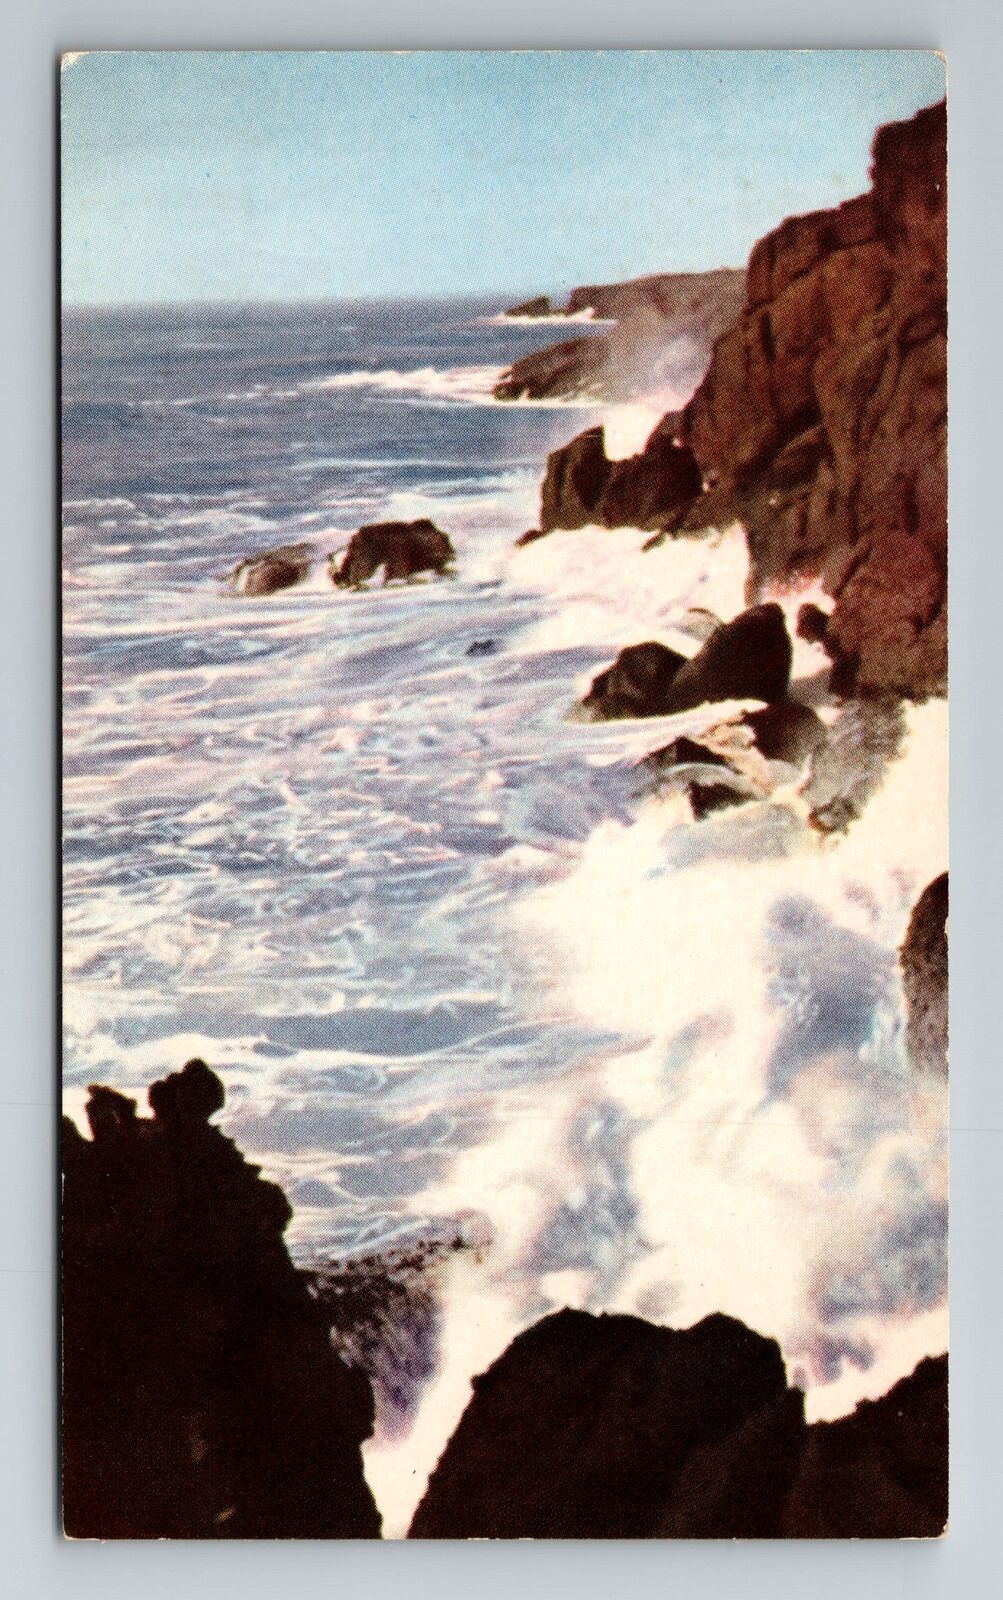 OR-Oregon, Scenic Crashing Waves, Antique, Vintage Souvenir Postcard